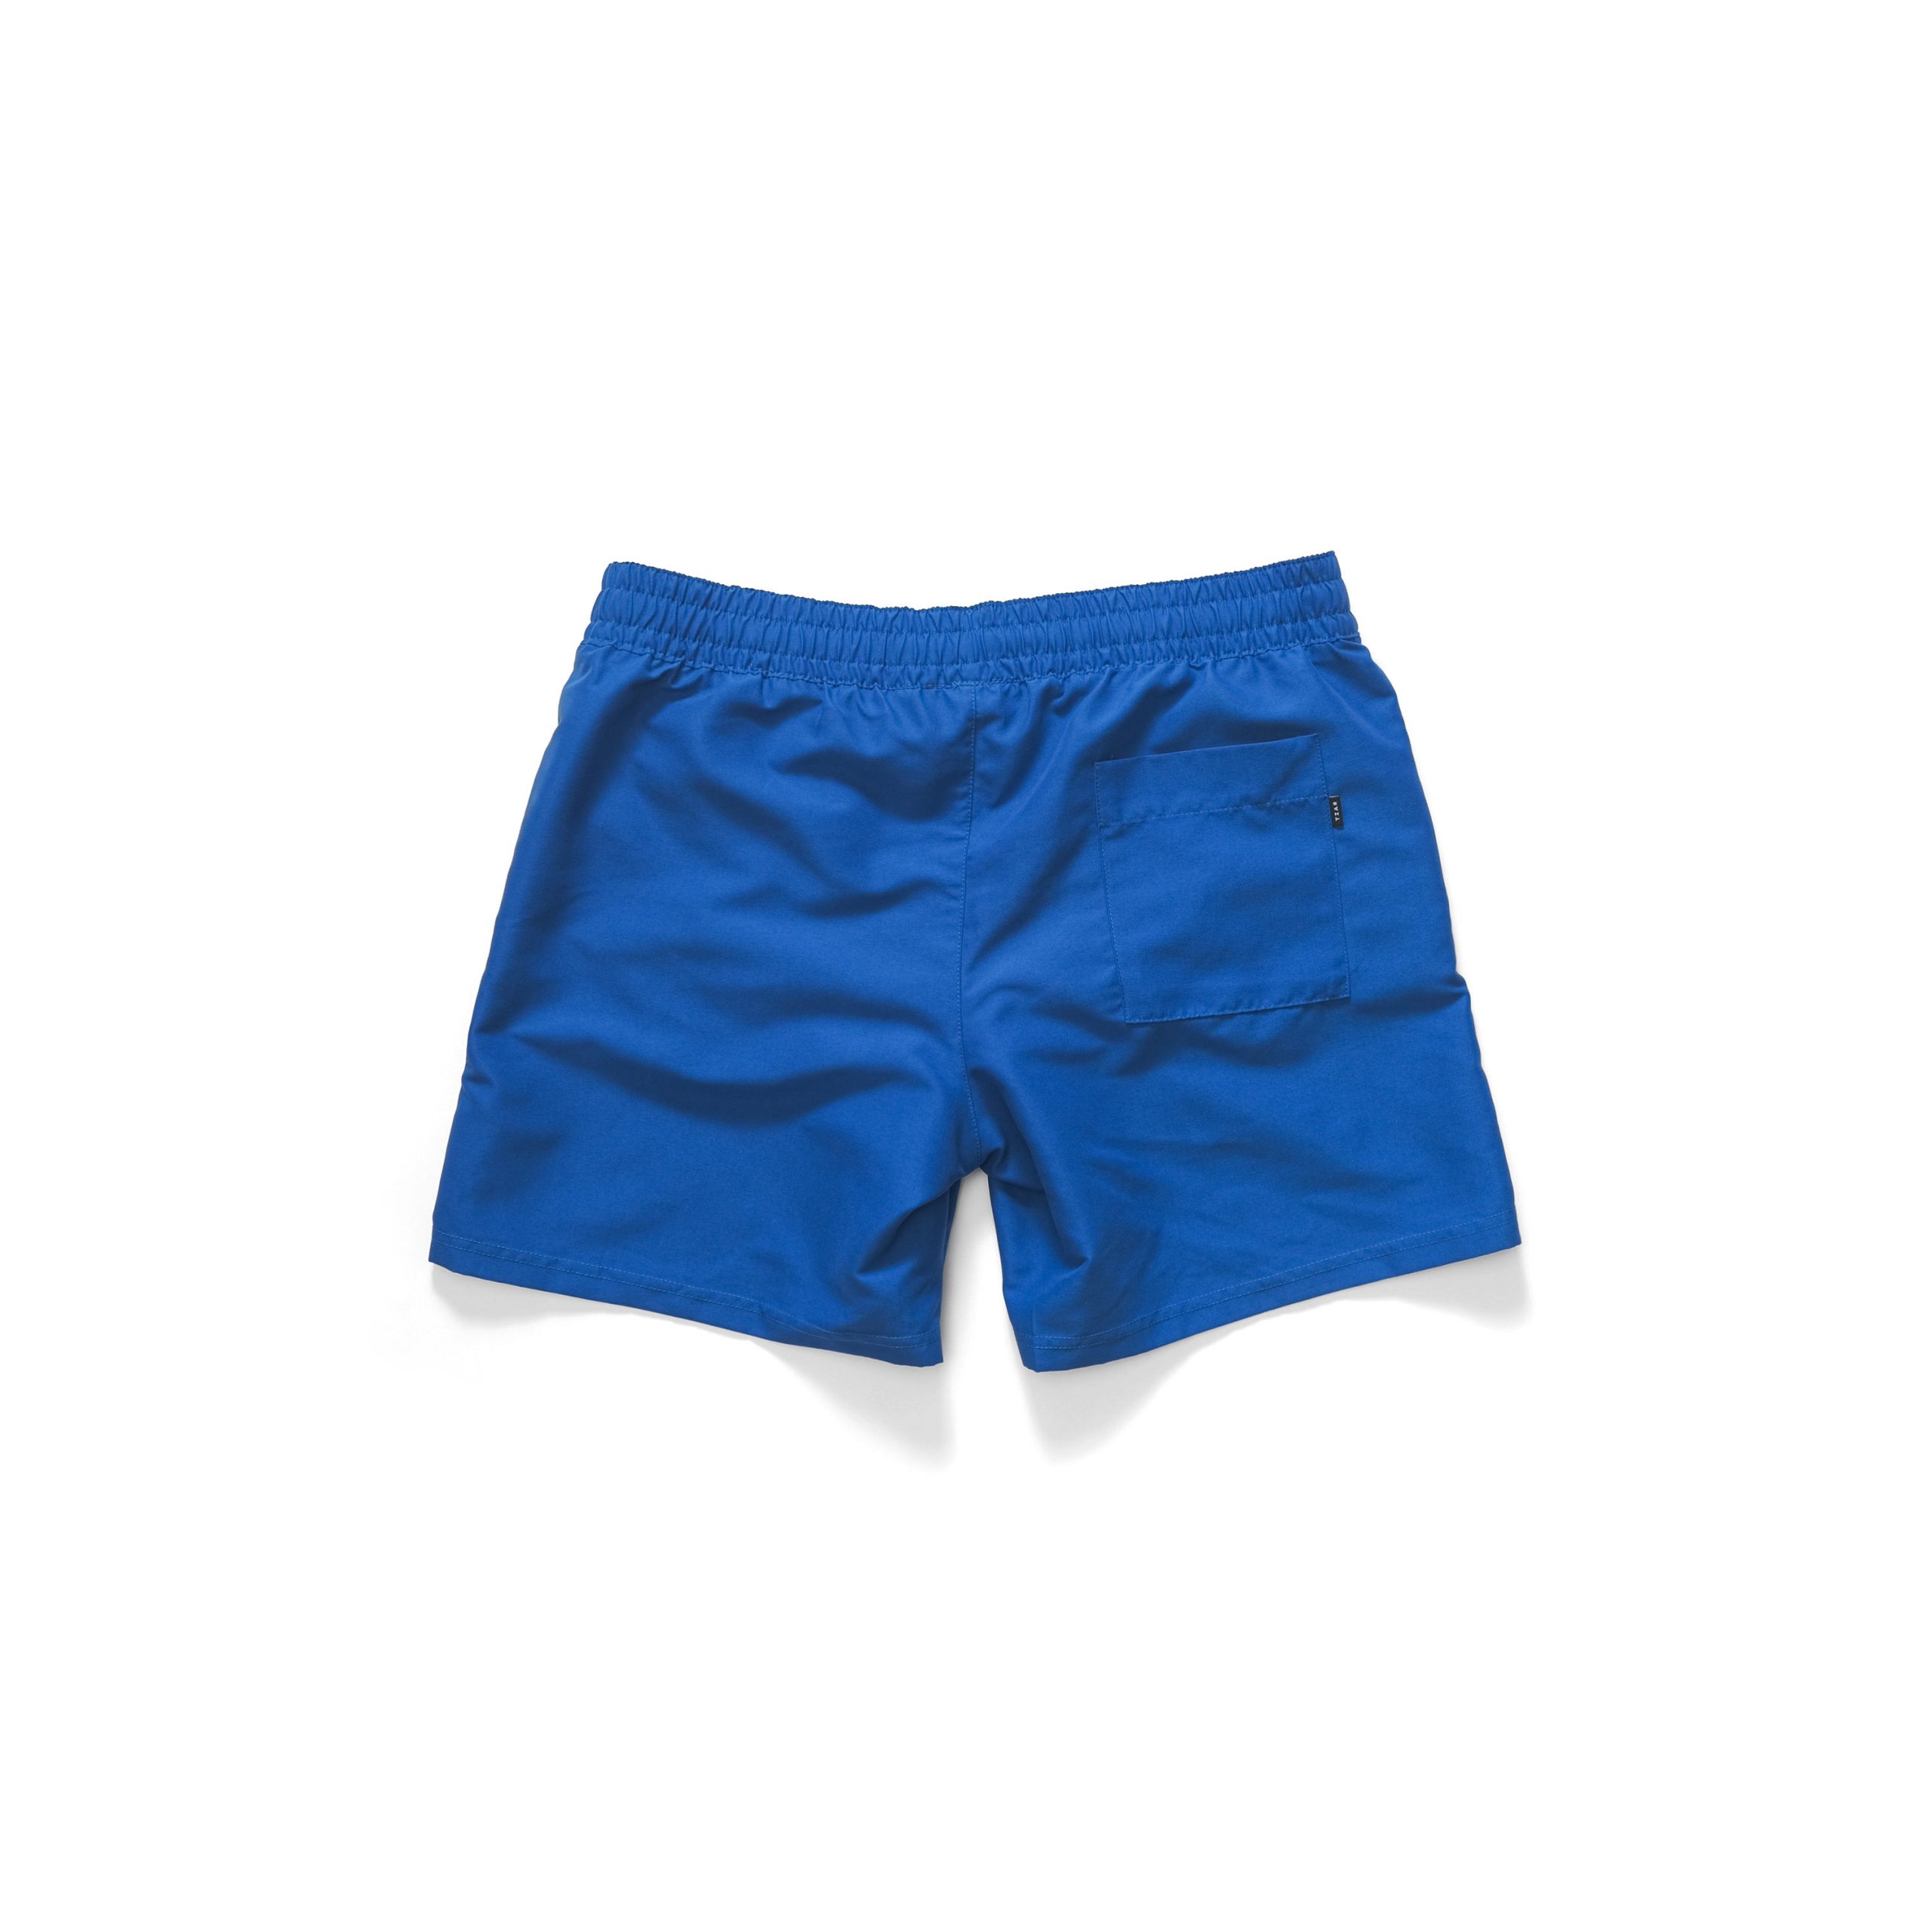 Smiley Tzar, blue swim trunks – DechkoTzar